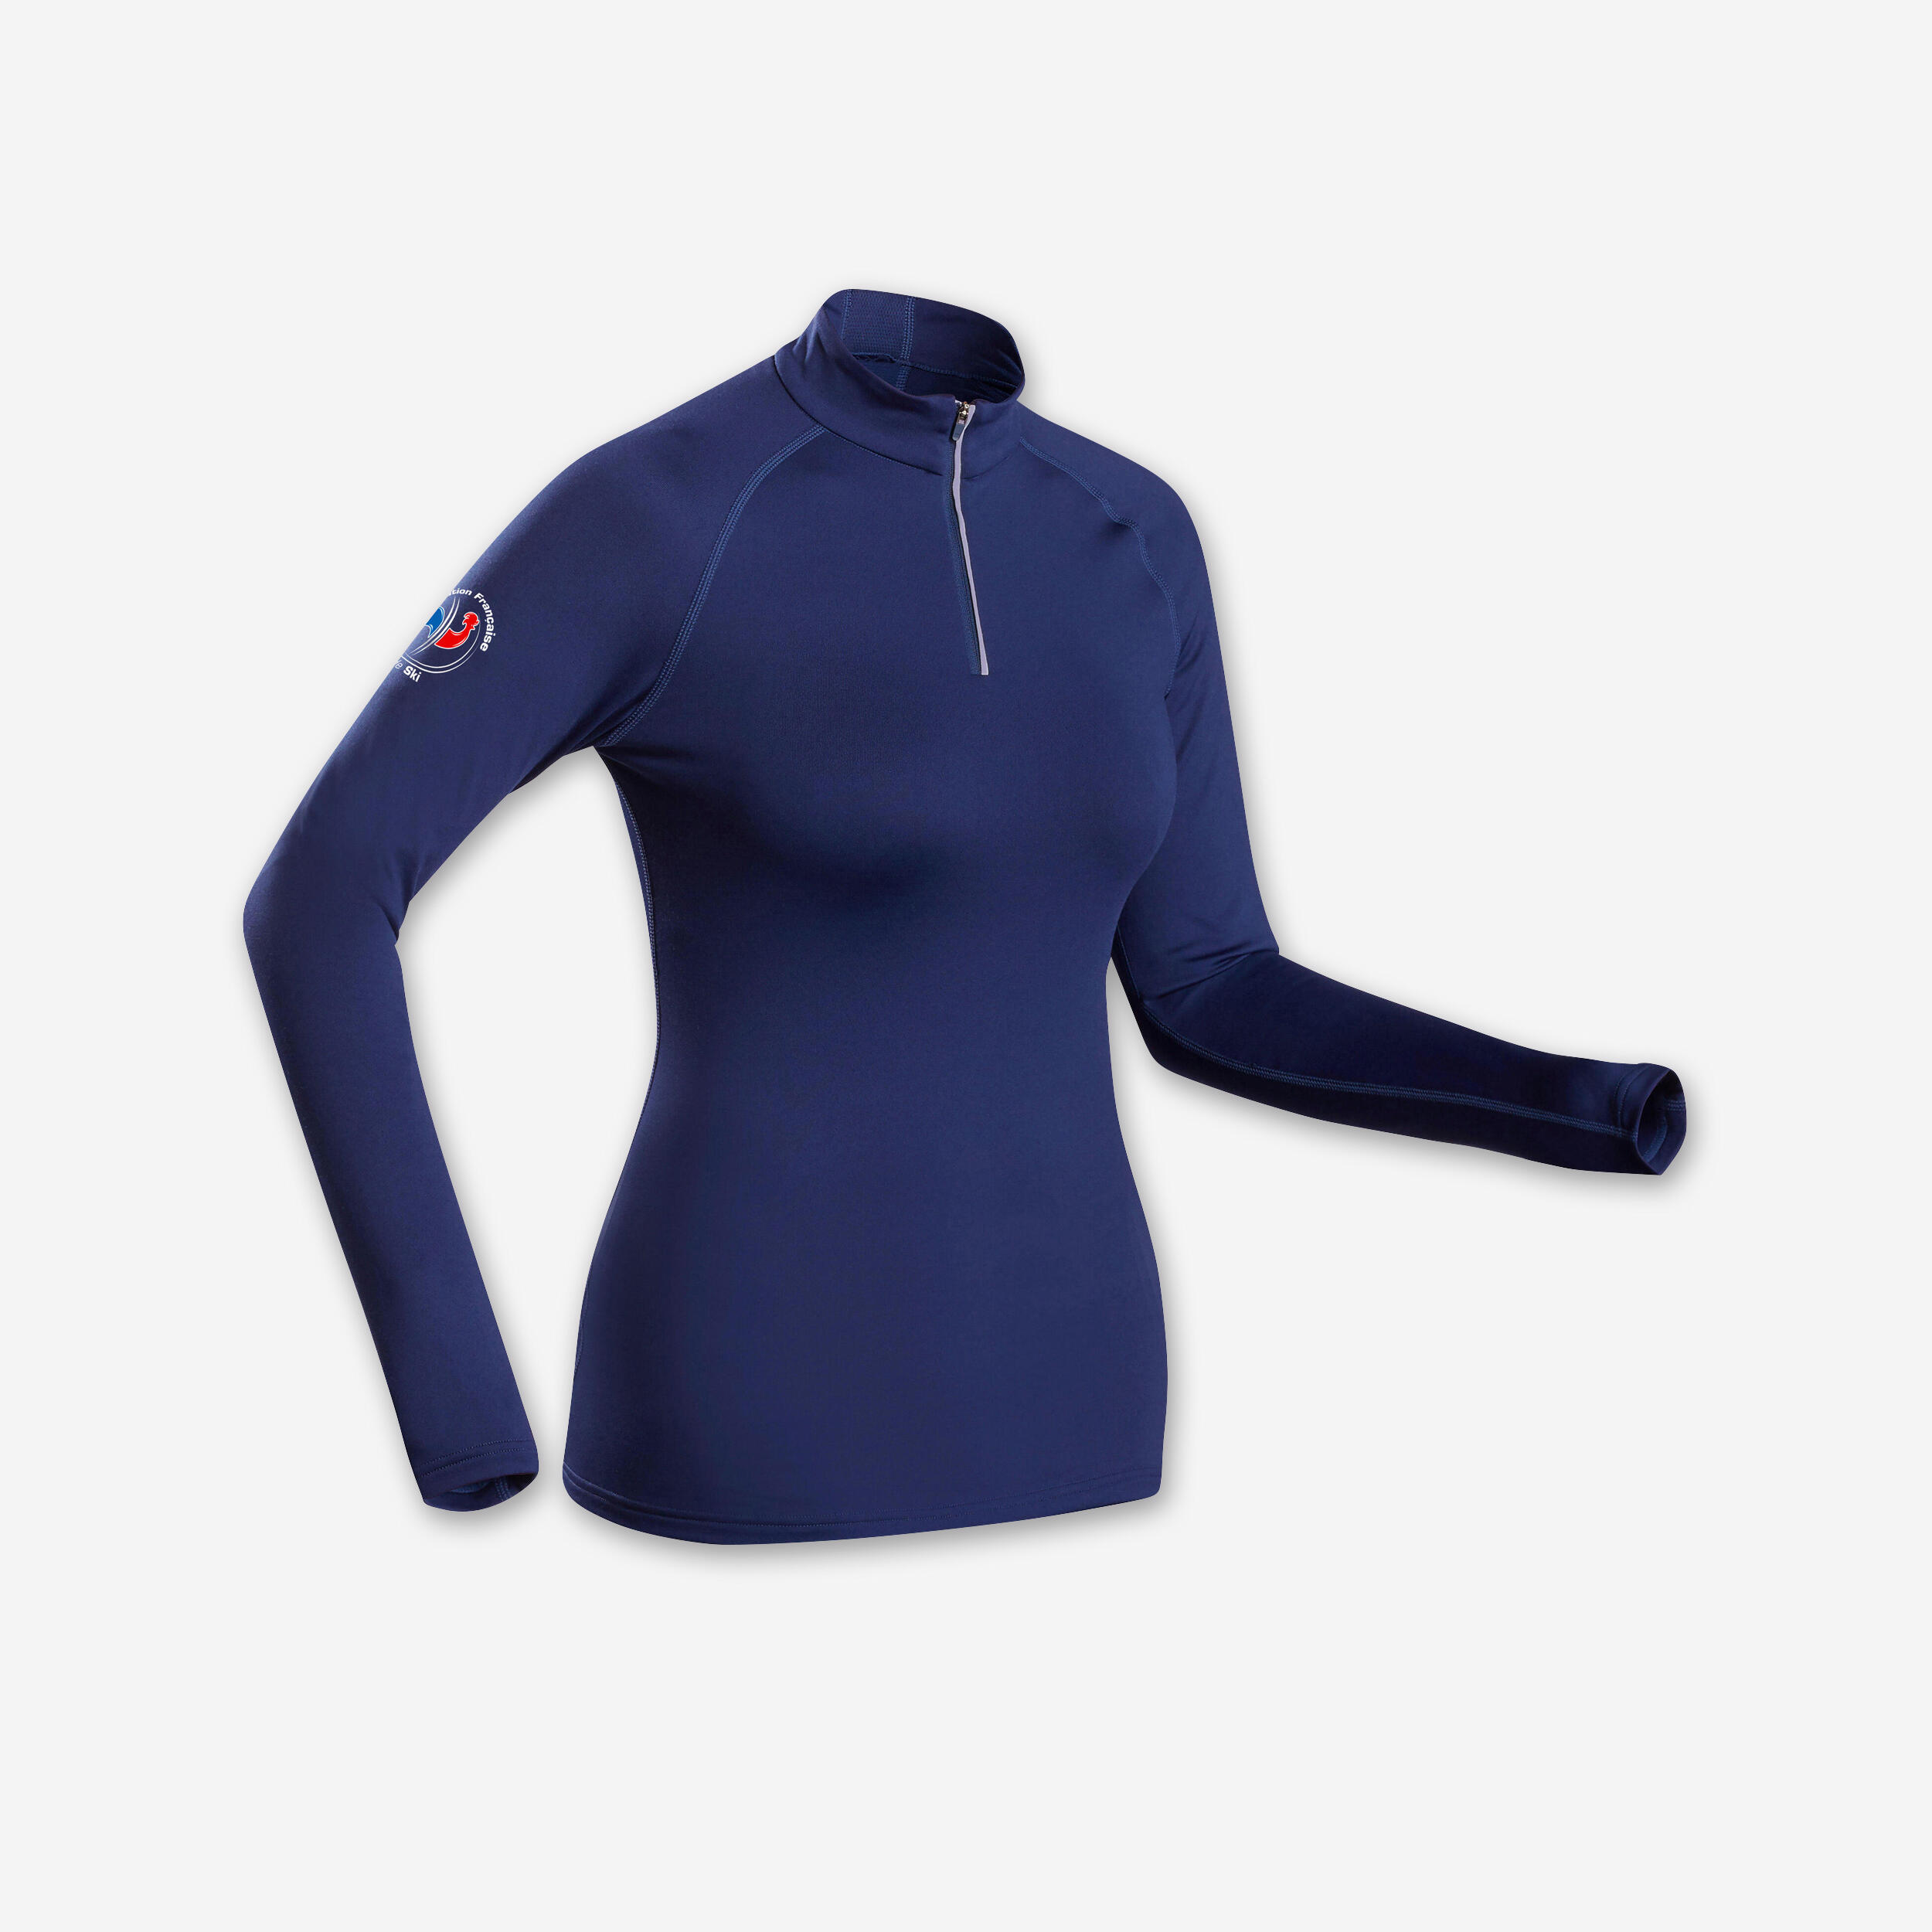 WEDZE Women's 500 FFS thermal base layer 1/2 zip ski top - navy blue